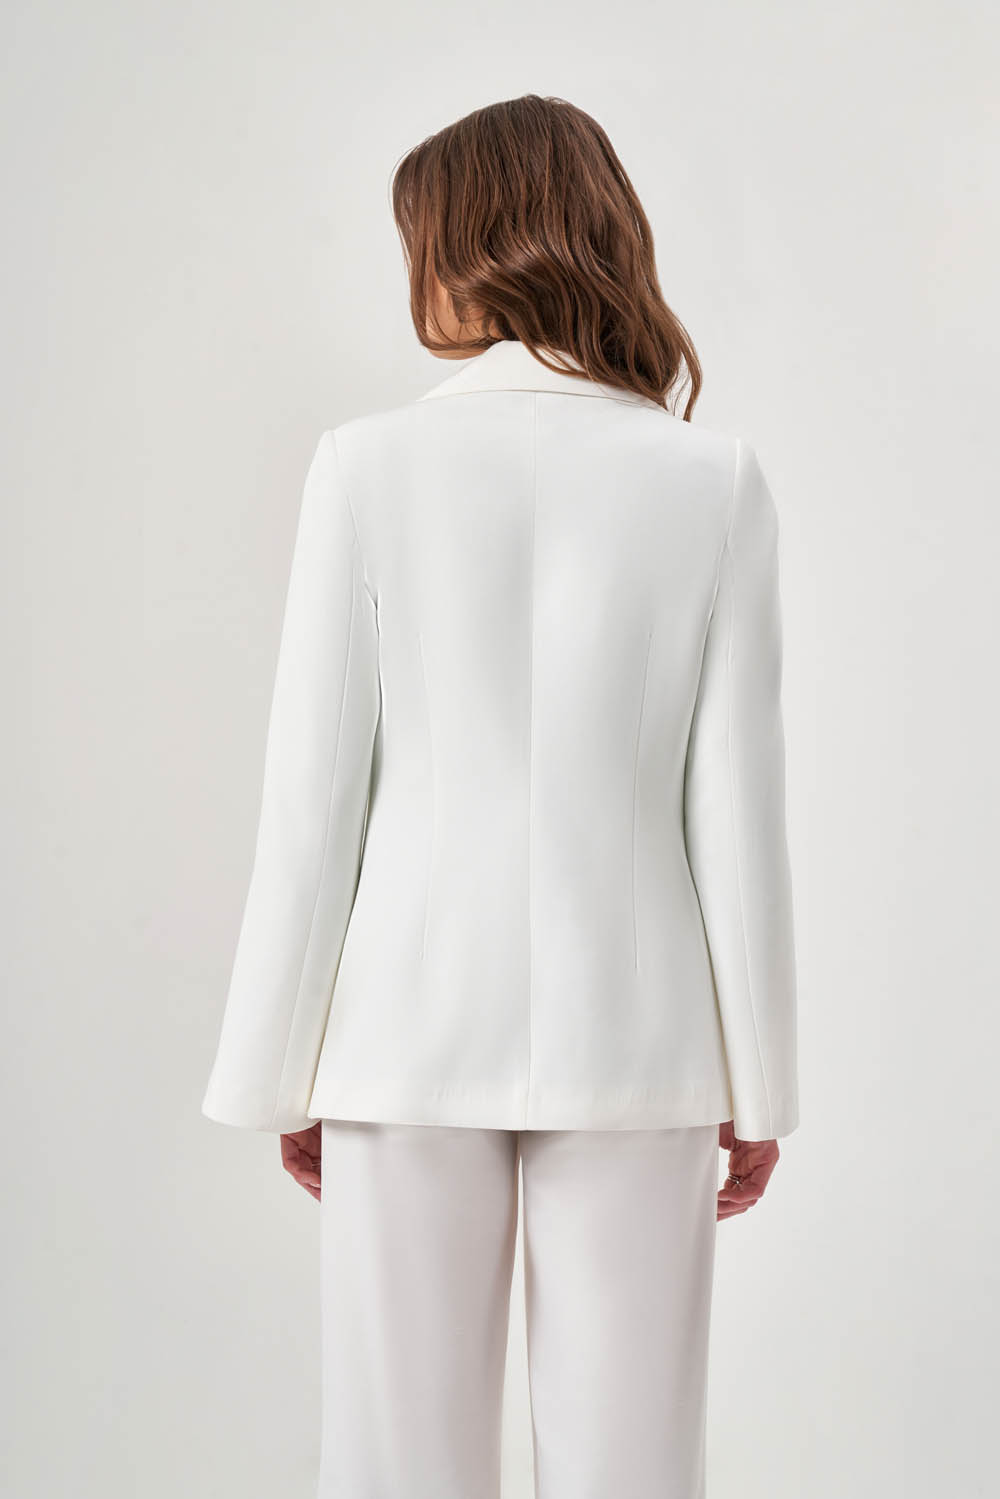 Zipper Sleeve White Jacket